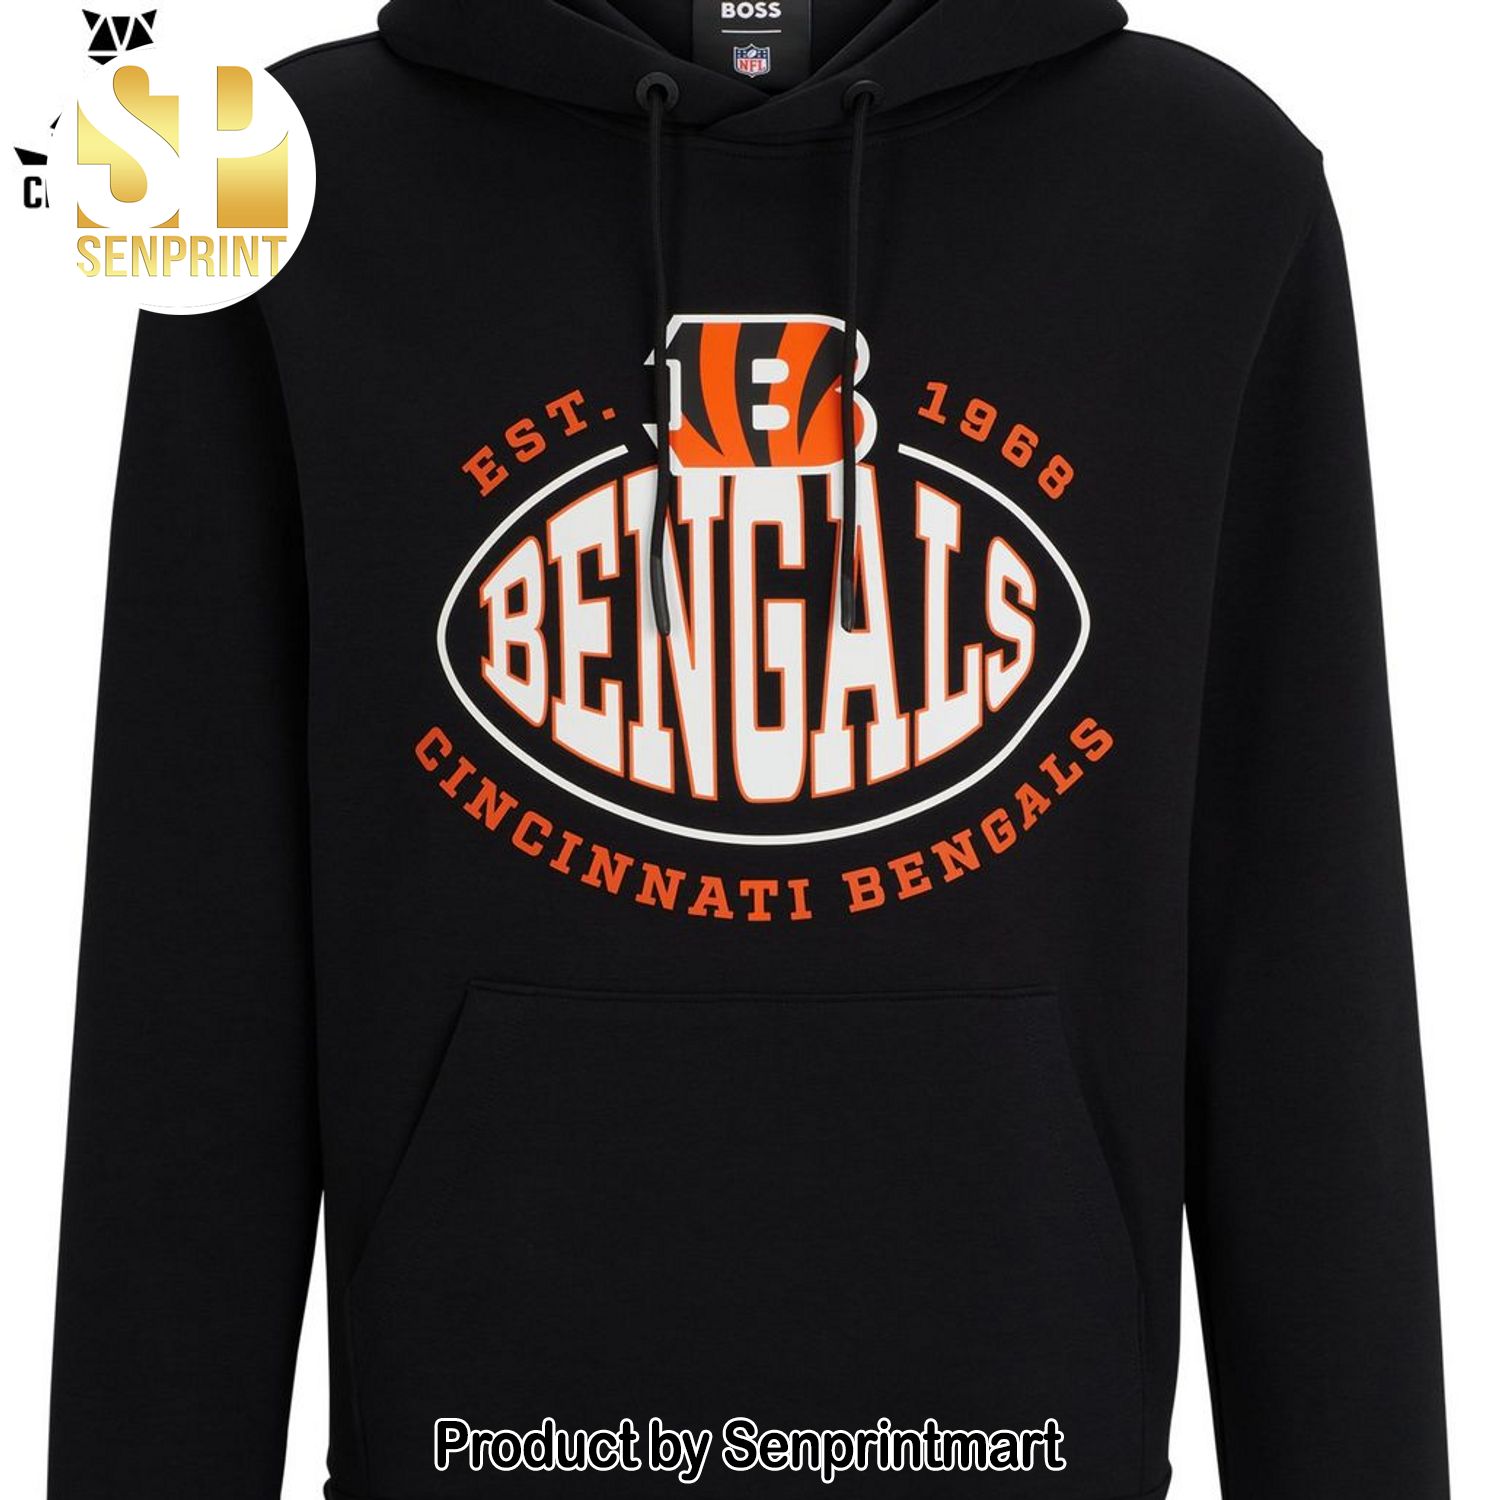 EST 1968 Cincinnati Bengals Logo Design All Over Printed Shirt